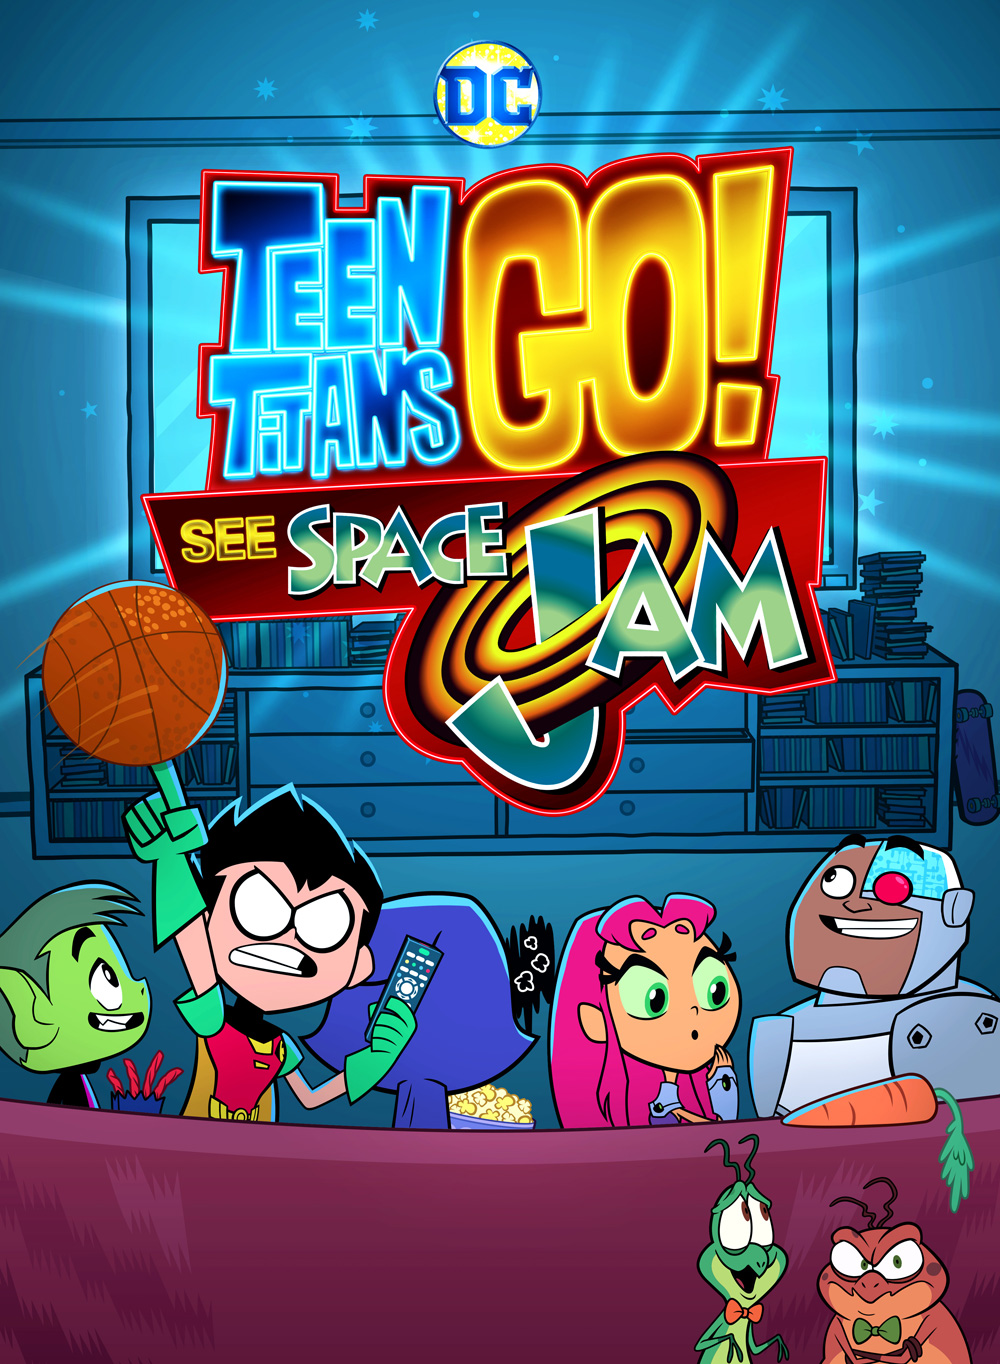 Teen Titans Go!  Ver Space Jam